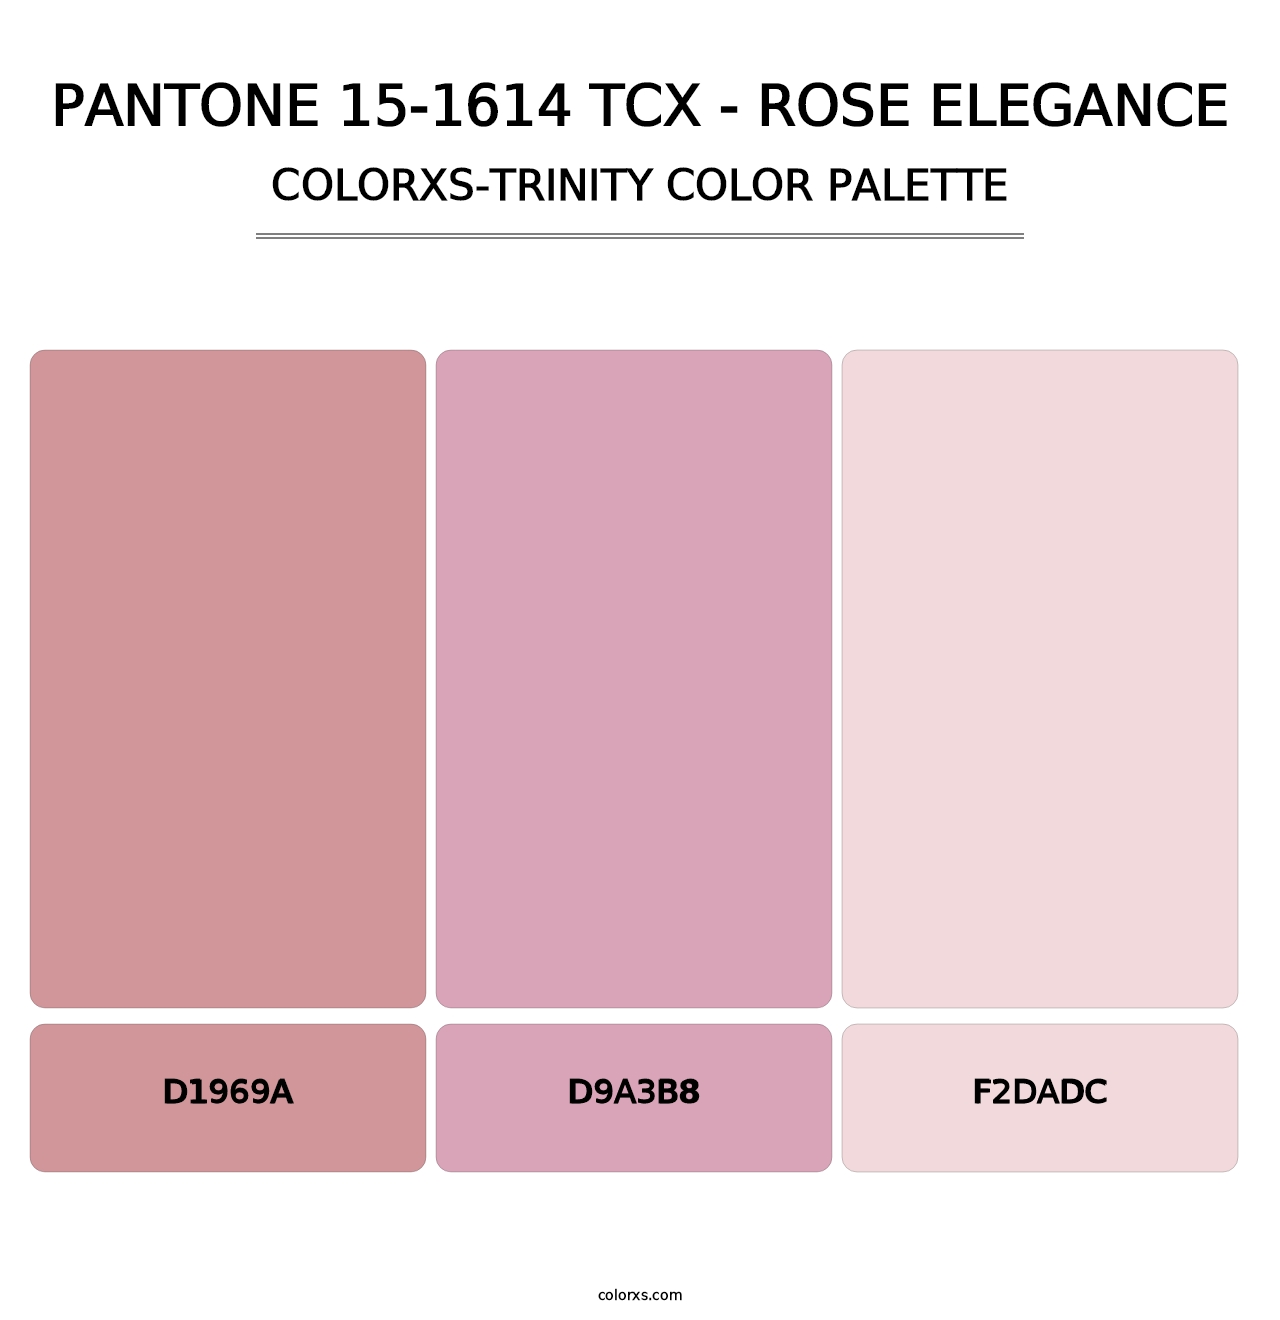 PANTONE 15-1614 TCX - Rose Elegance - Colorxs Trinity Palette